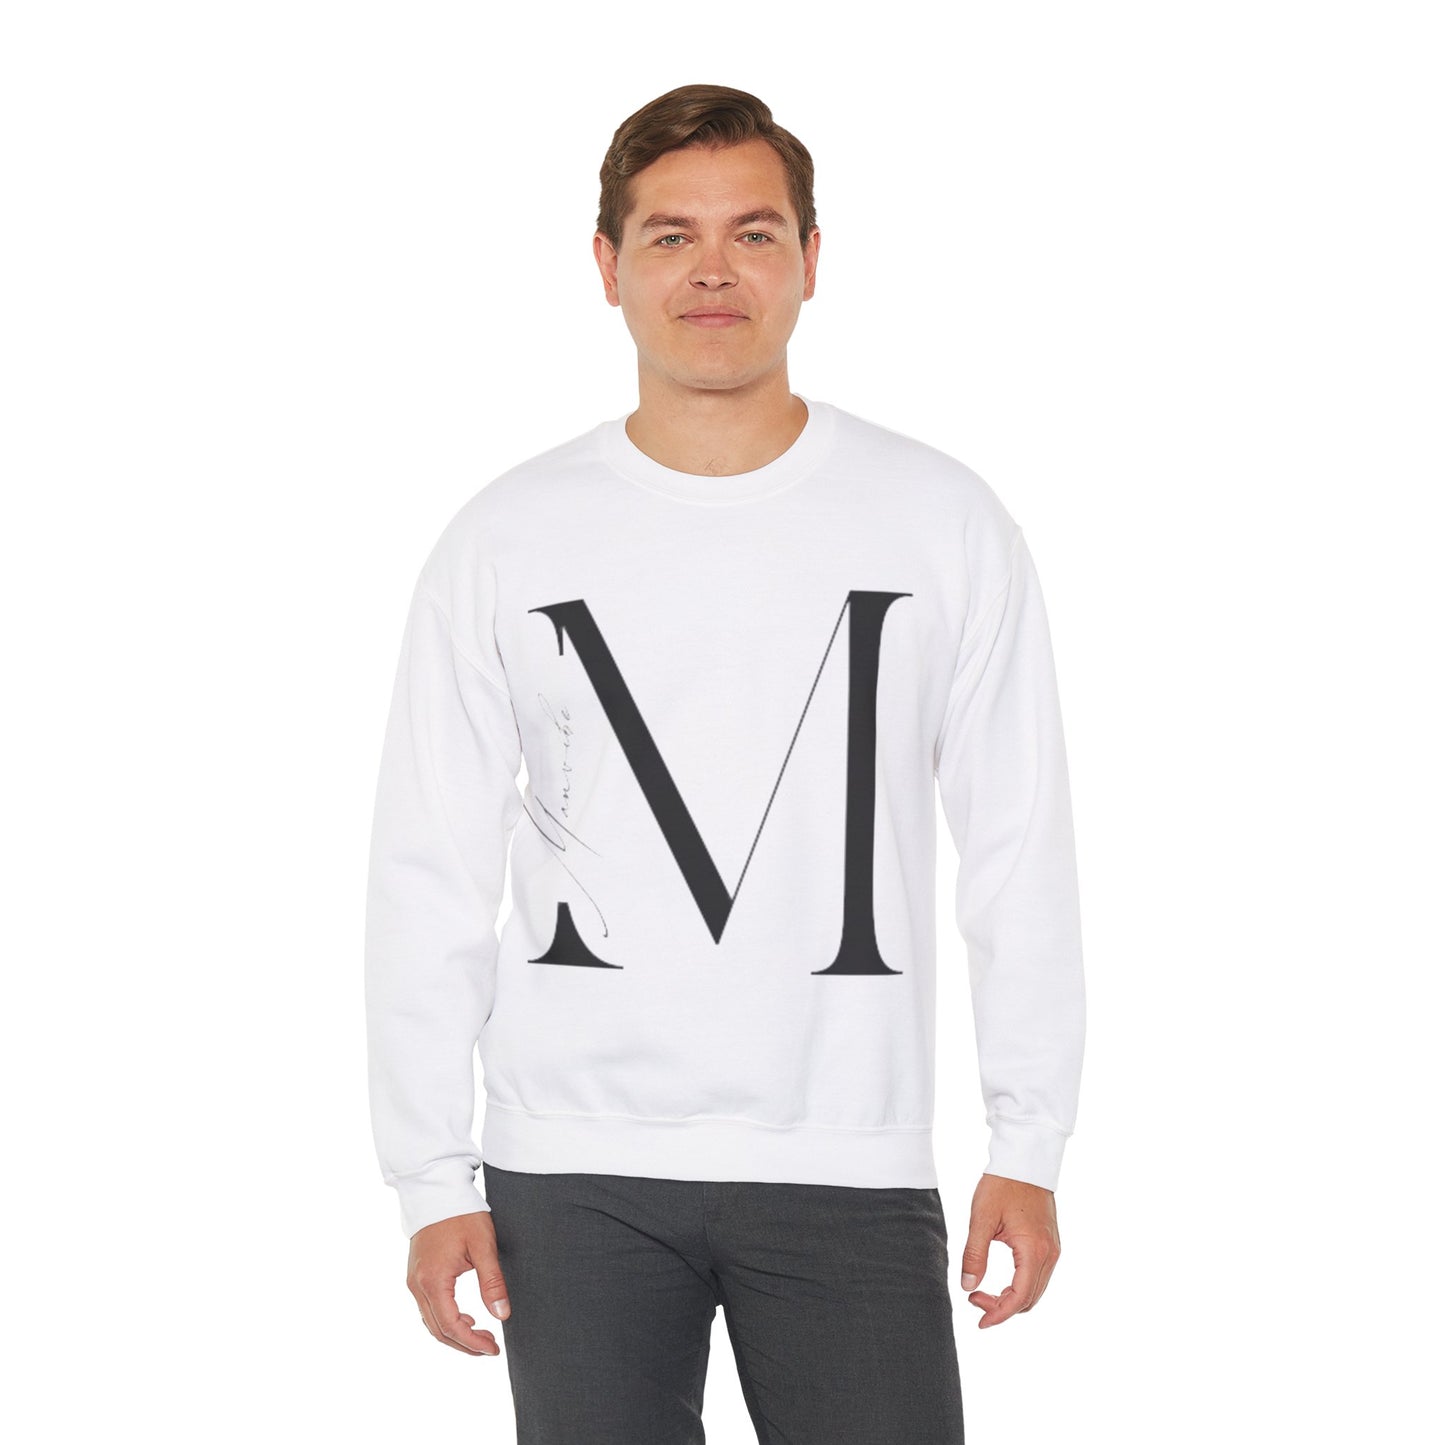 MAN VIBE crewneck Sweatshirt